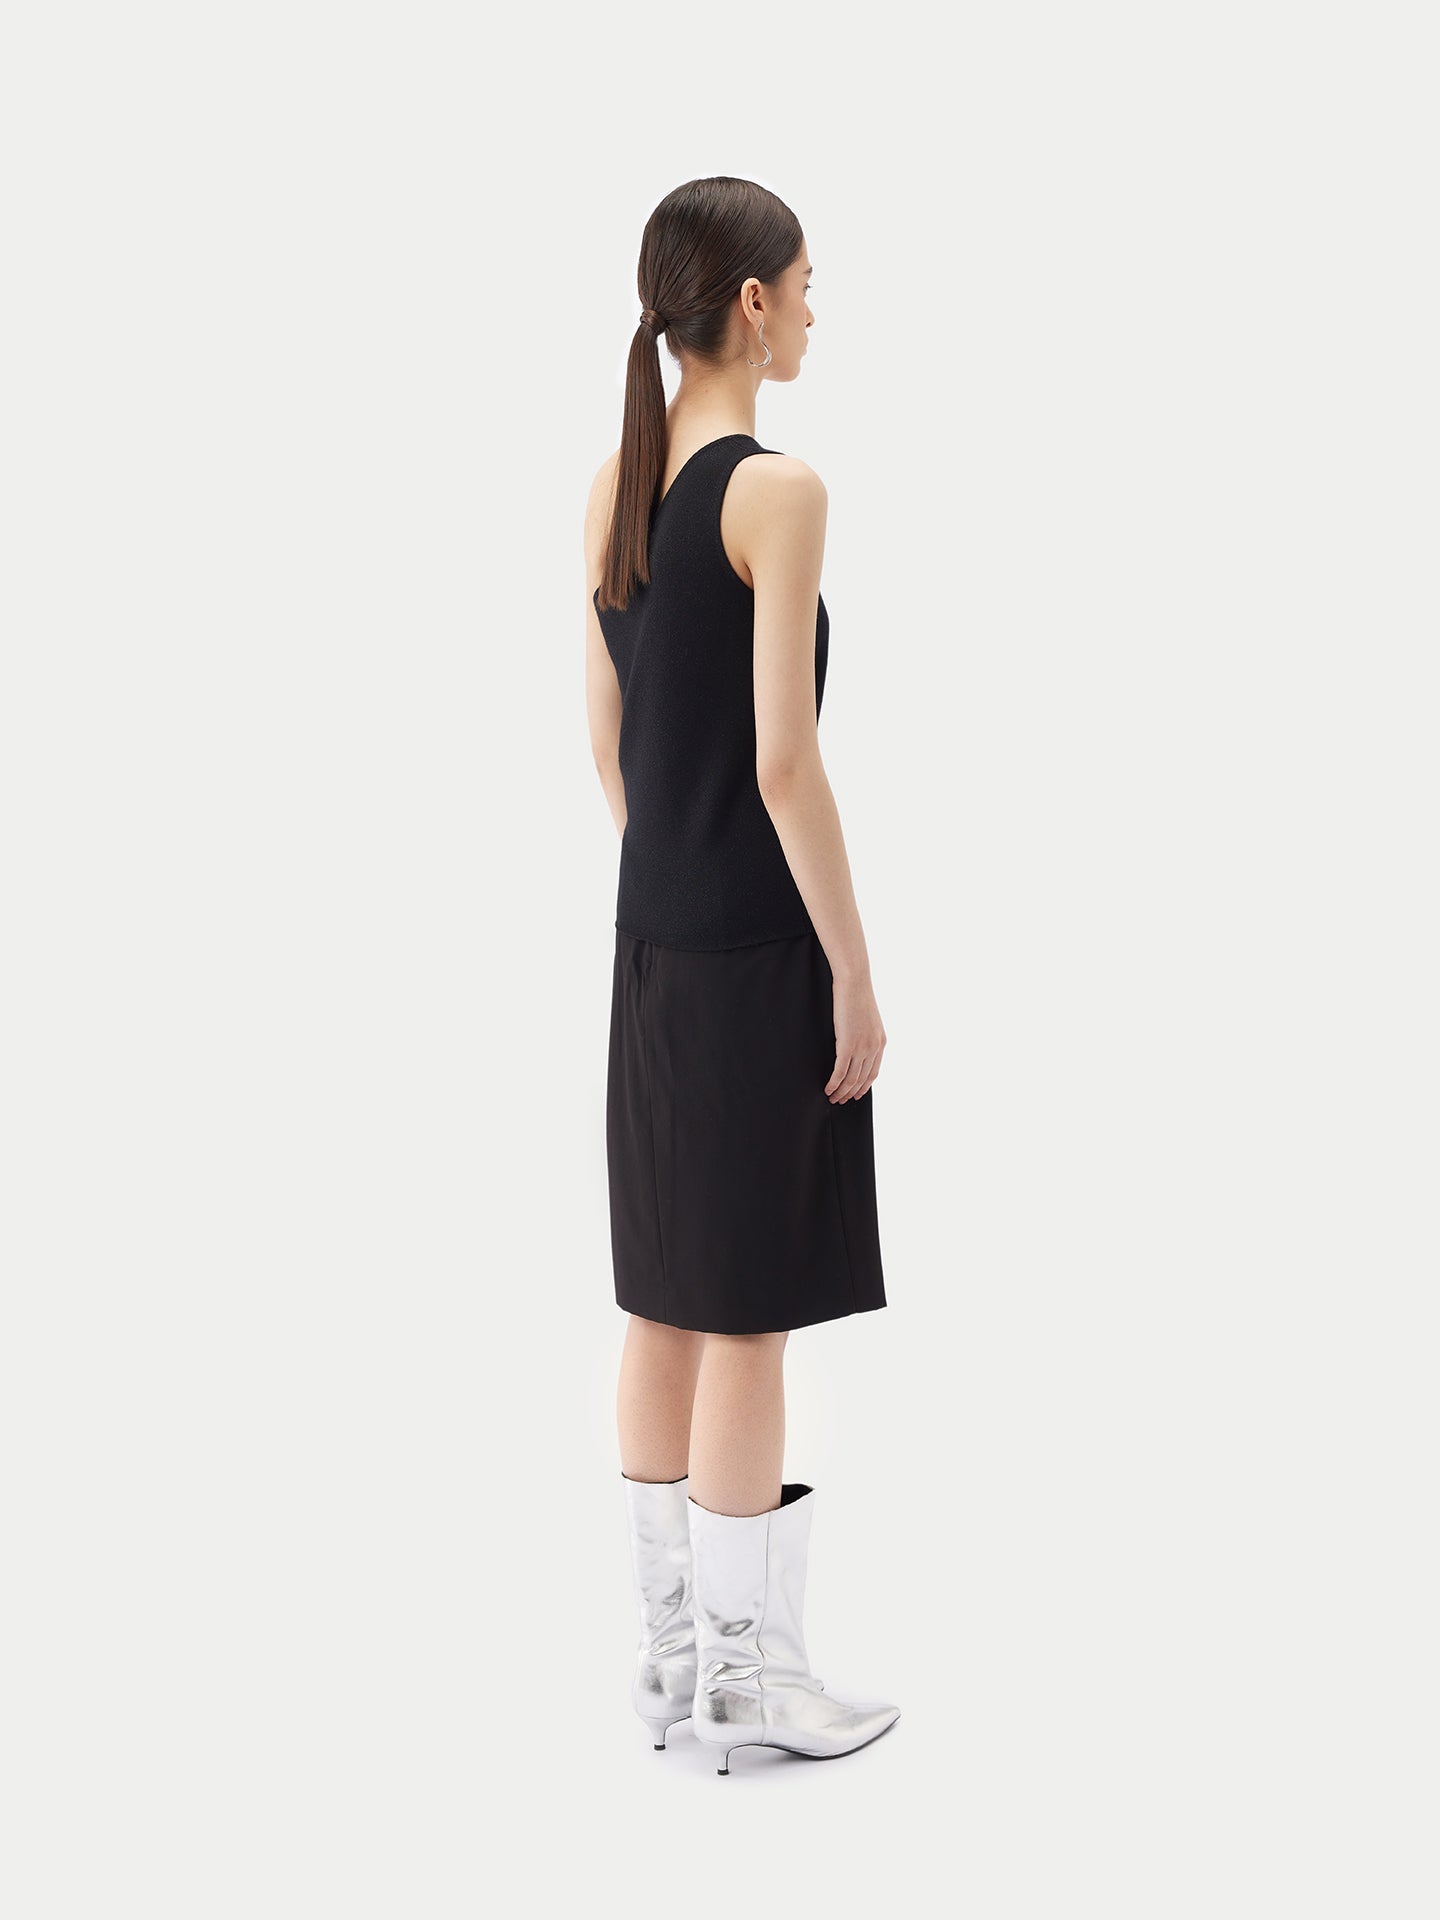 Women's Cashmere Silk Sleeveless Asymmetric Top Black - Gobi Cashmere